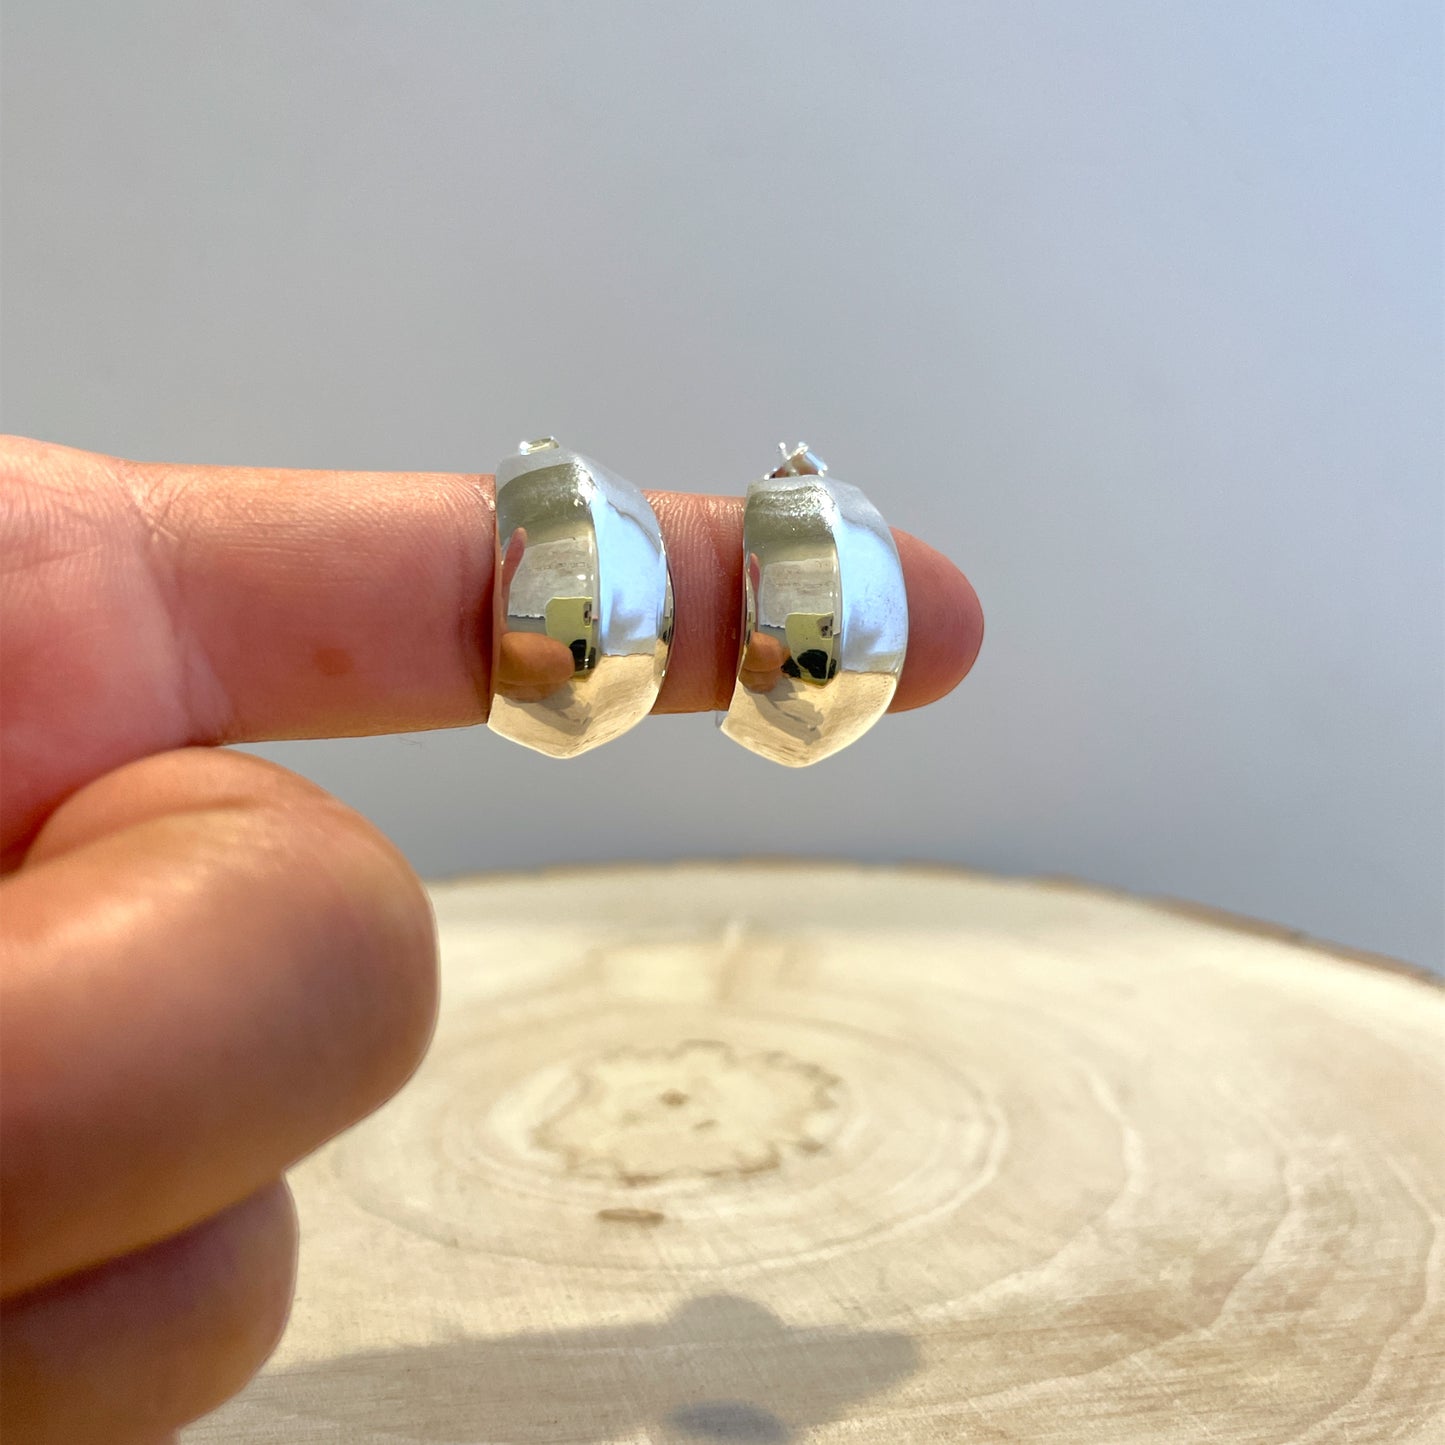 Silver Small Hoop Earrings